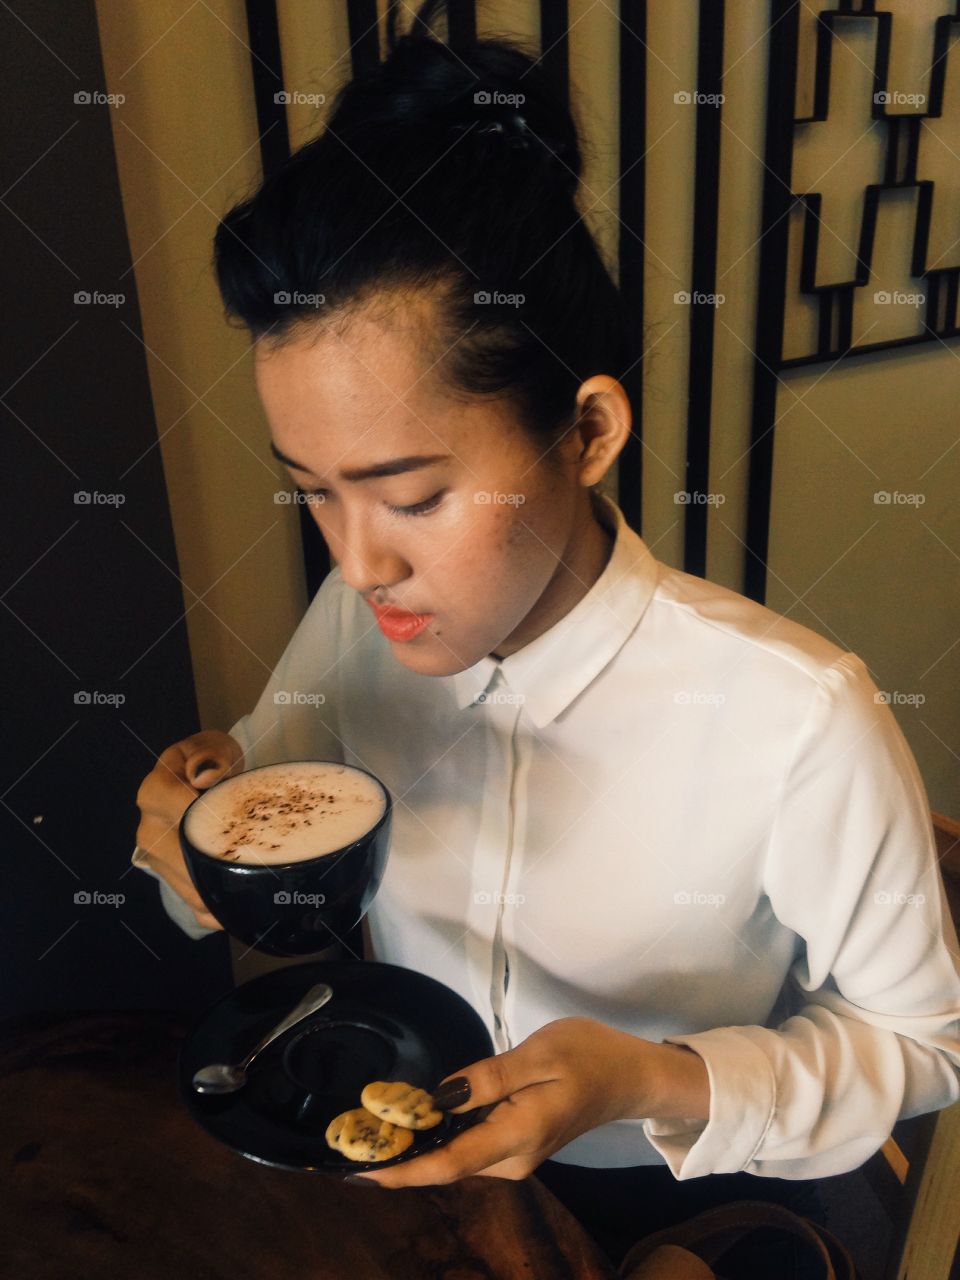 Asian woman drinking coffee